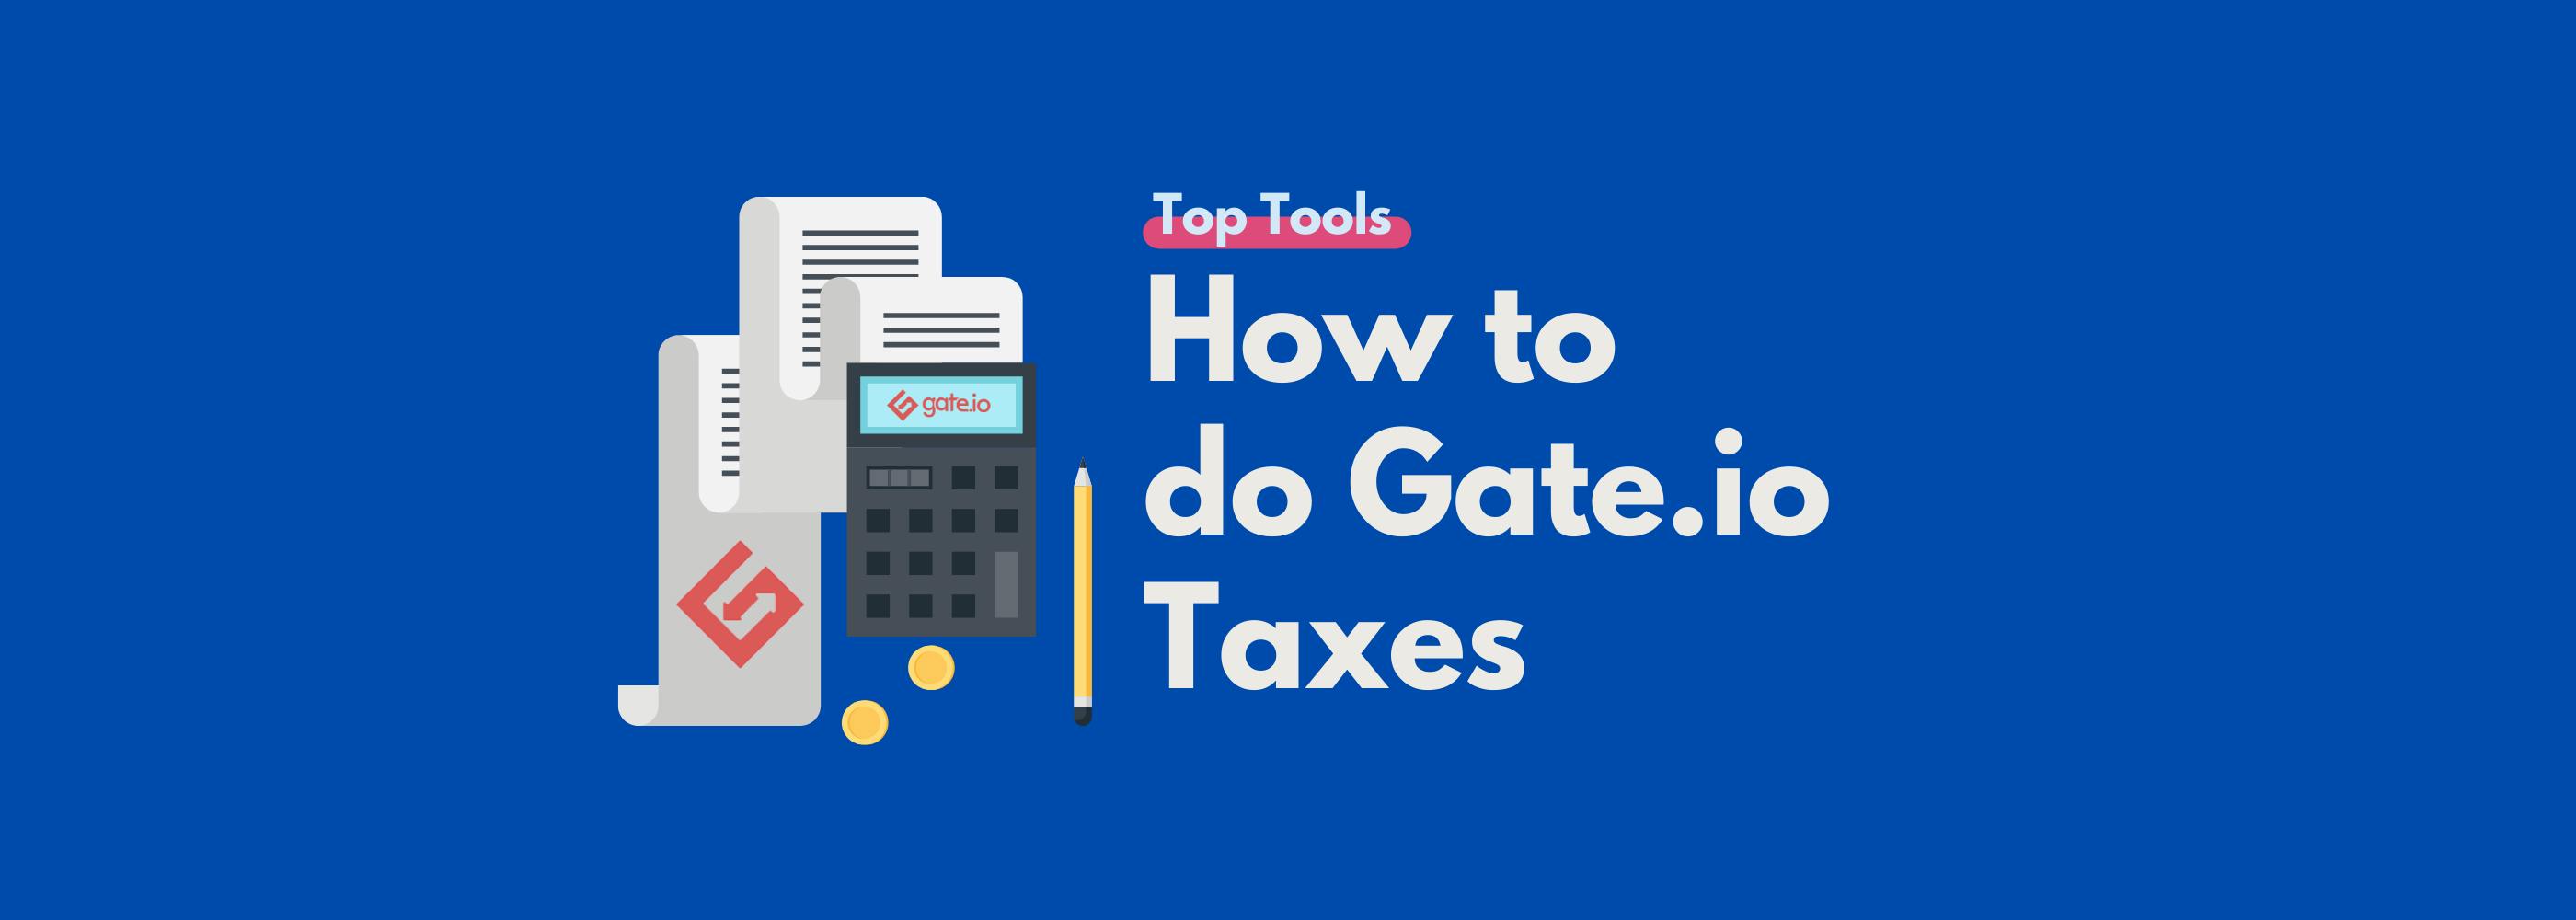 Gate.io taxes guide